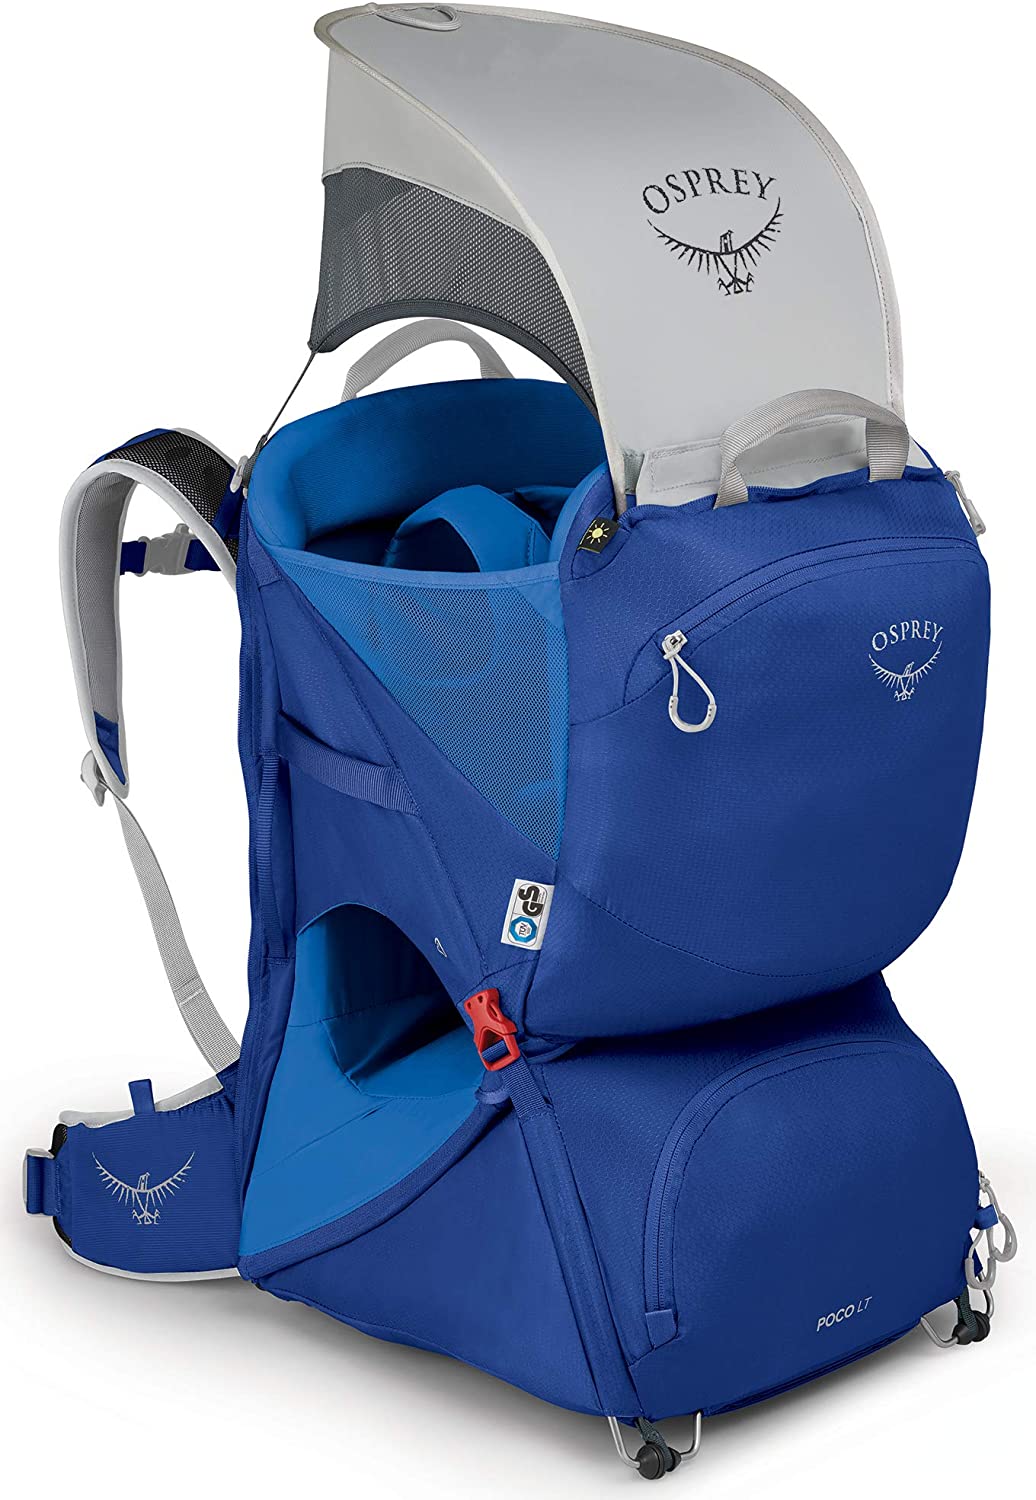 Osprey Unisex - Adult Poco LT Child Carriers & Packs Pack